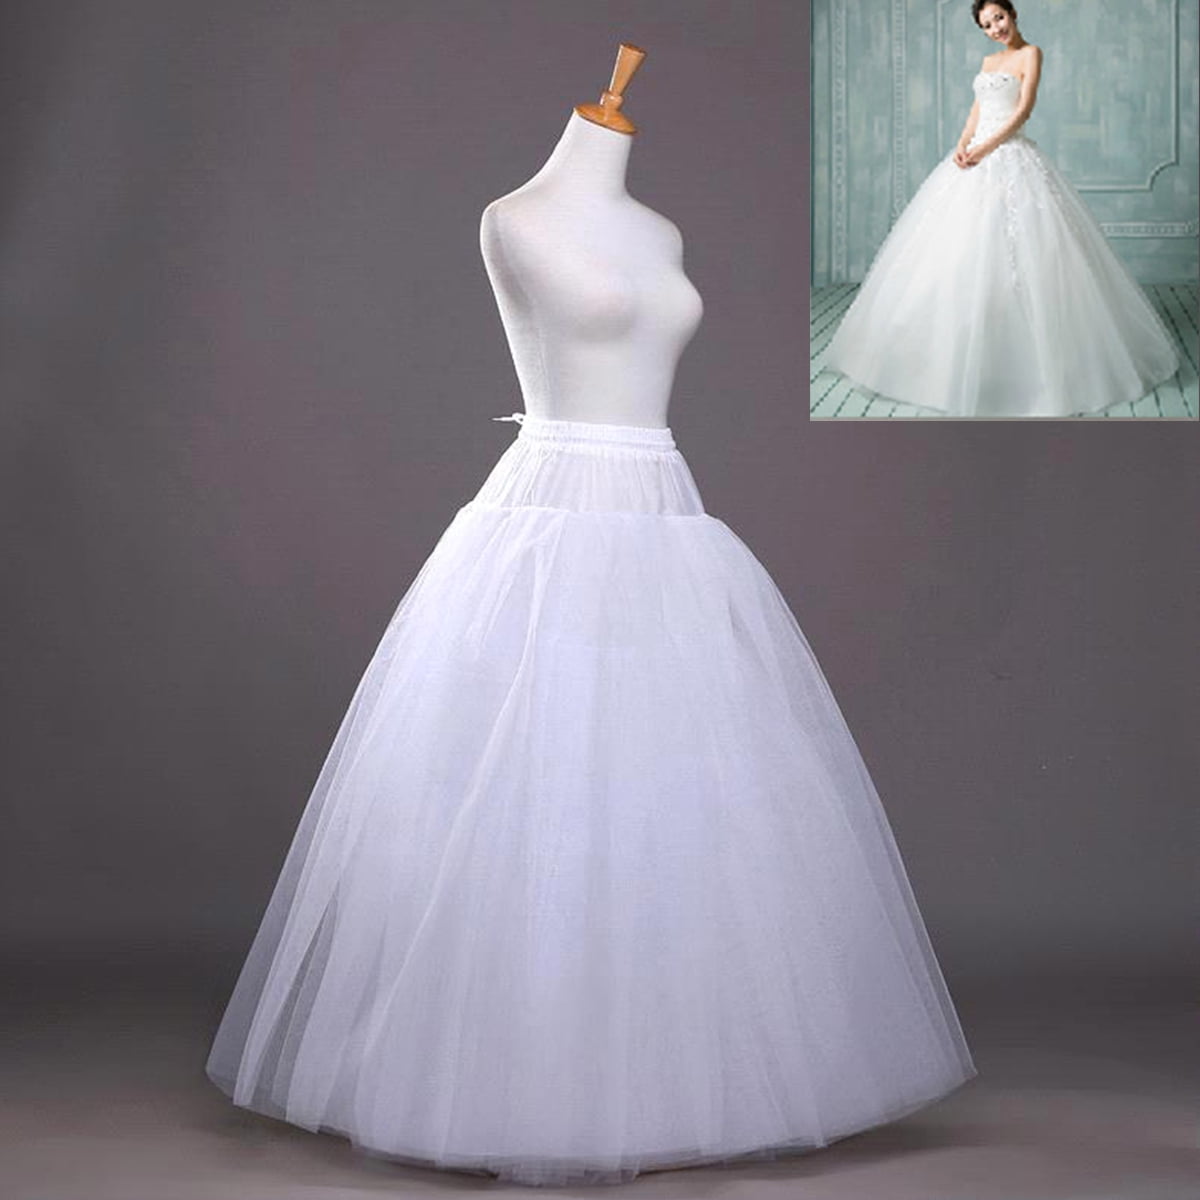 Plus Size 1hoop A-line Wedding Dress Bridal Petticoat Crinoline Underskirt